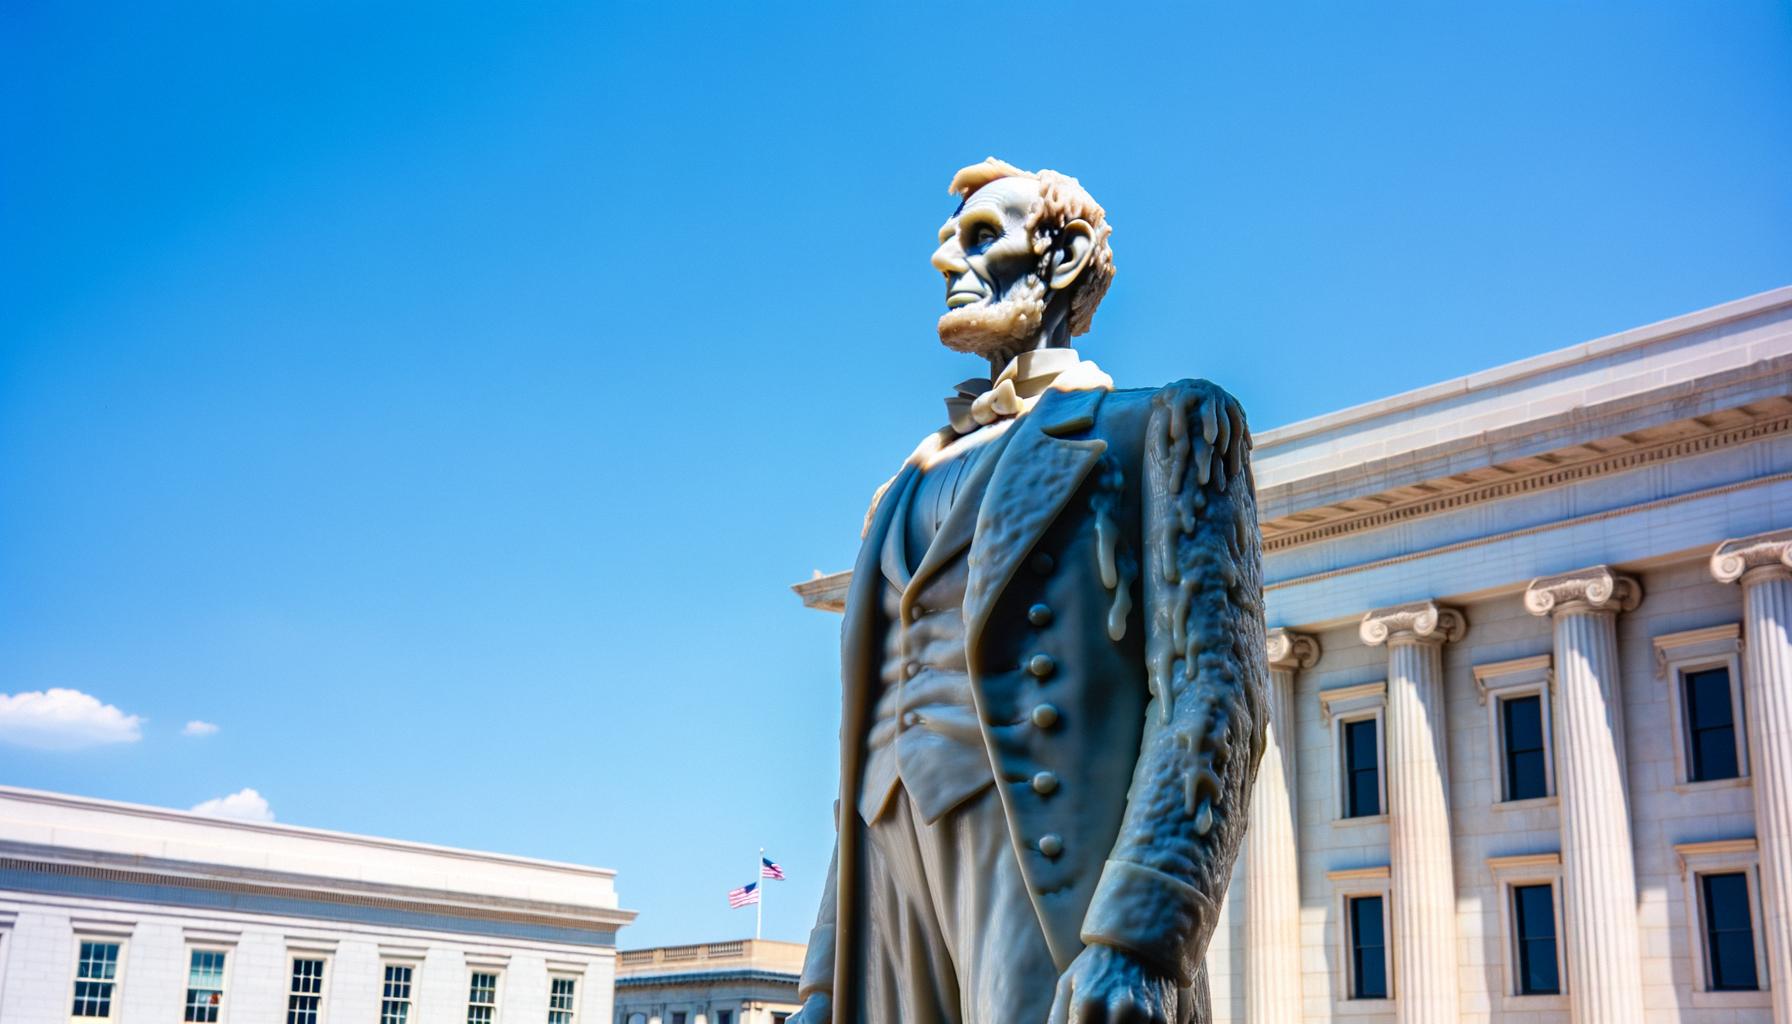 Abraham Lincoln wax statue melted due to Washington DC's heatwave Balanced News